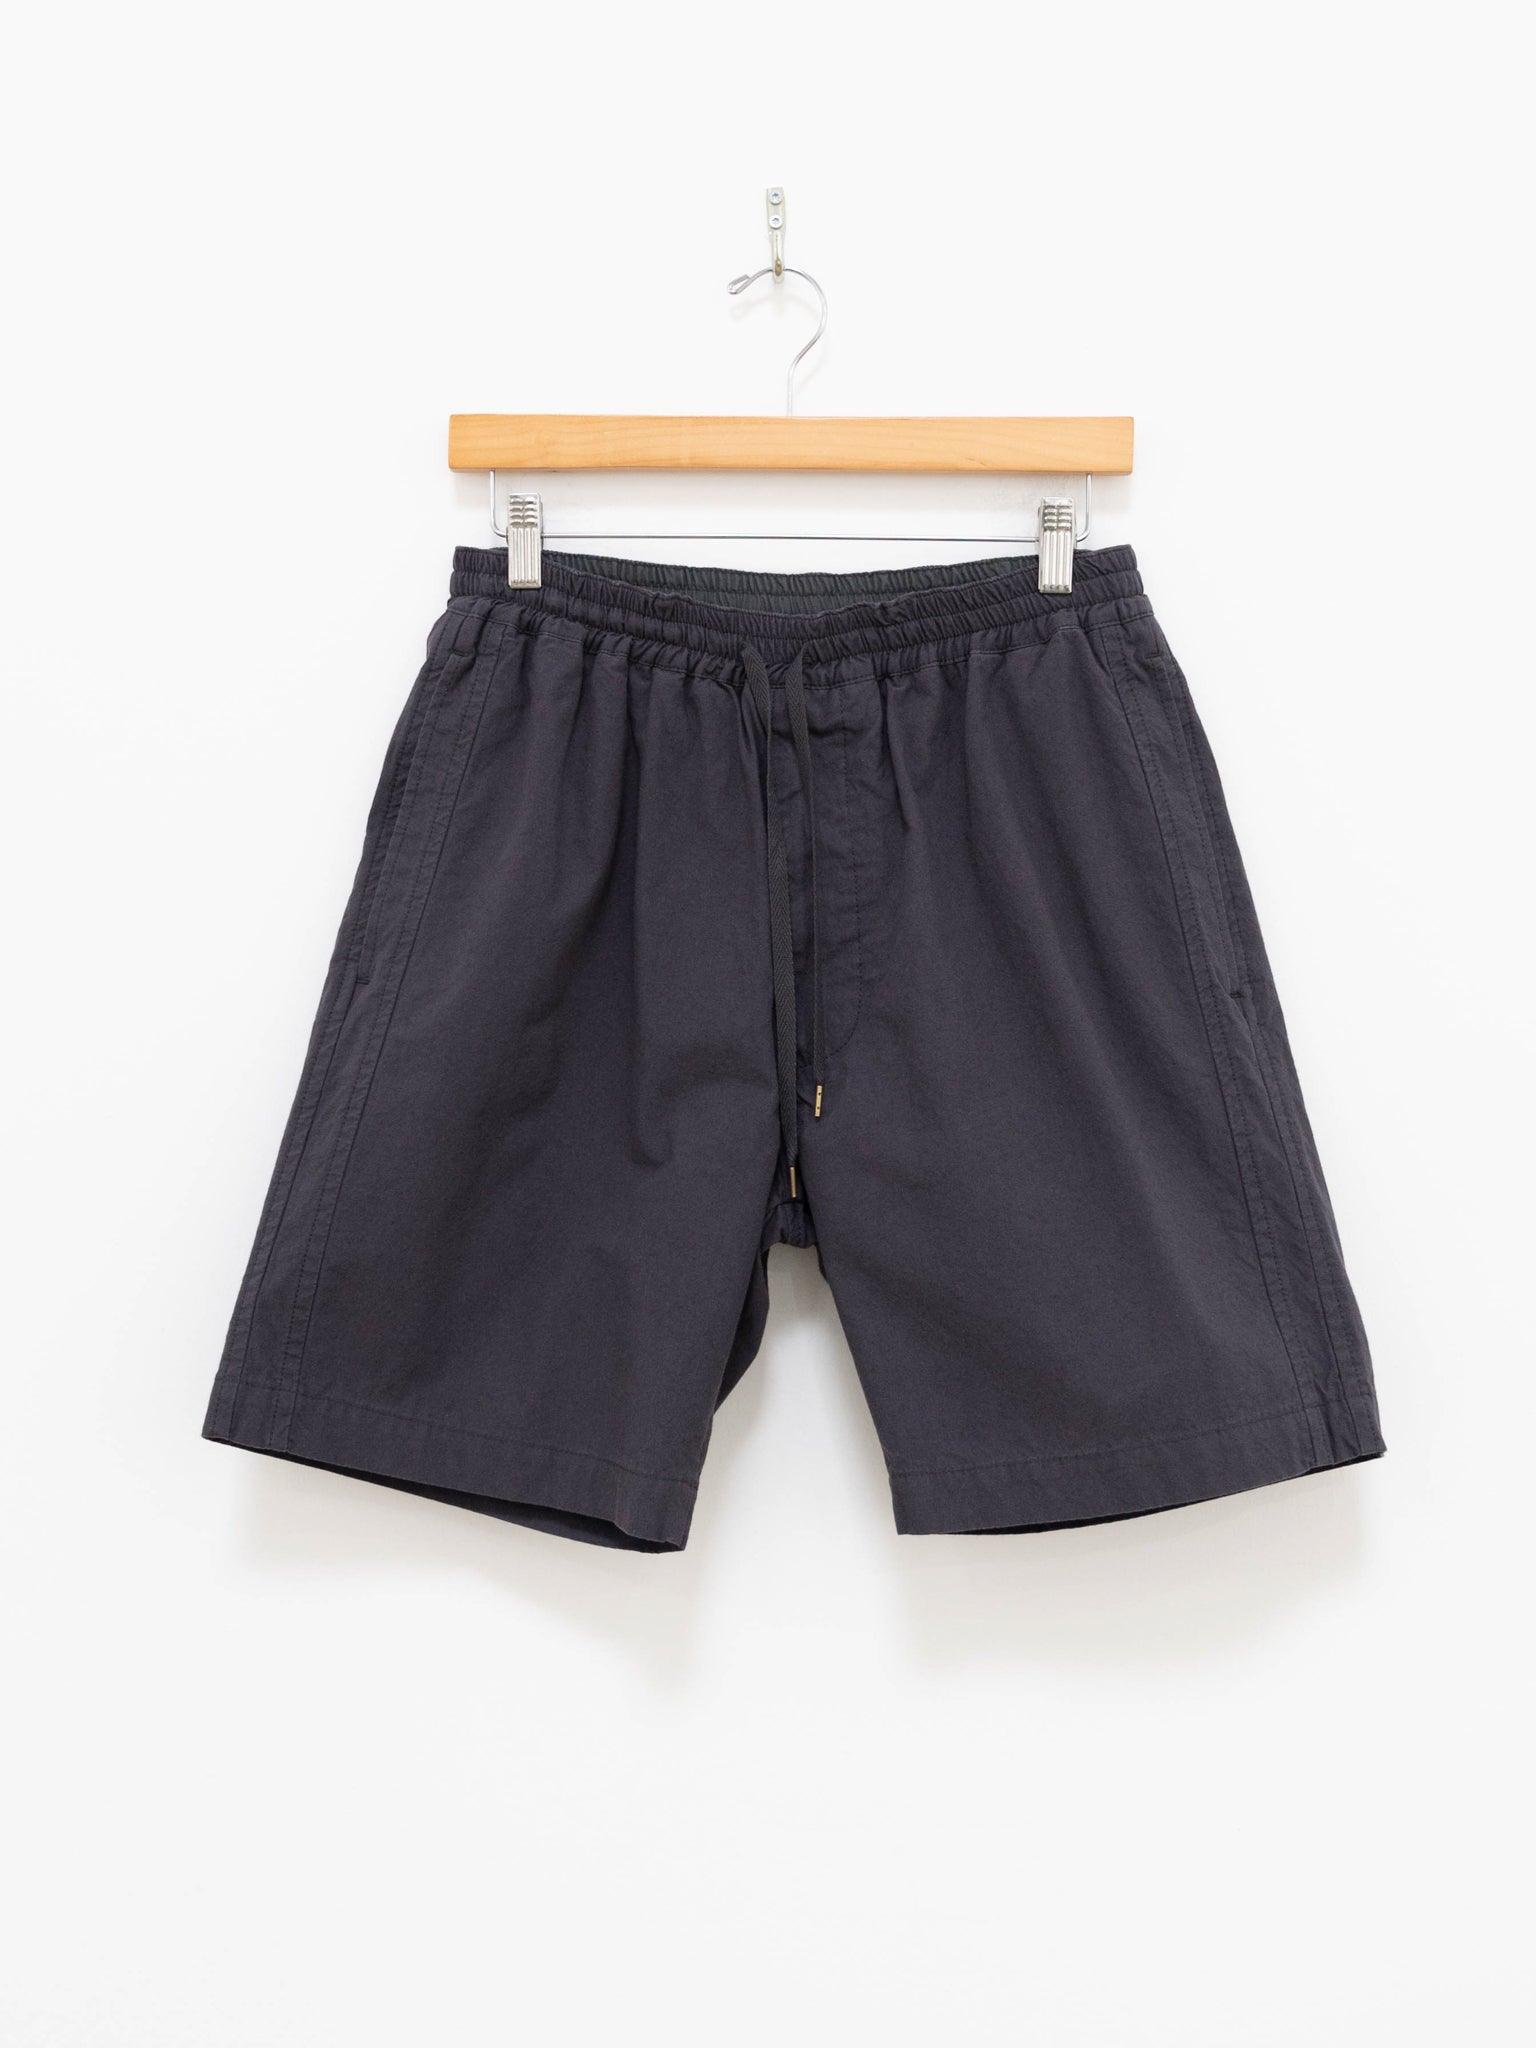 Namu Shop - Fujito Line Easy Shorts - Charcoal